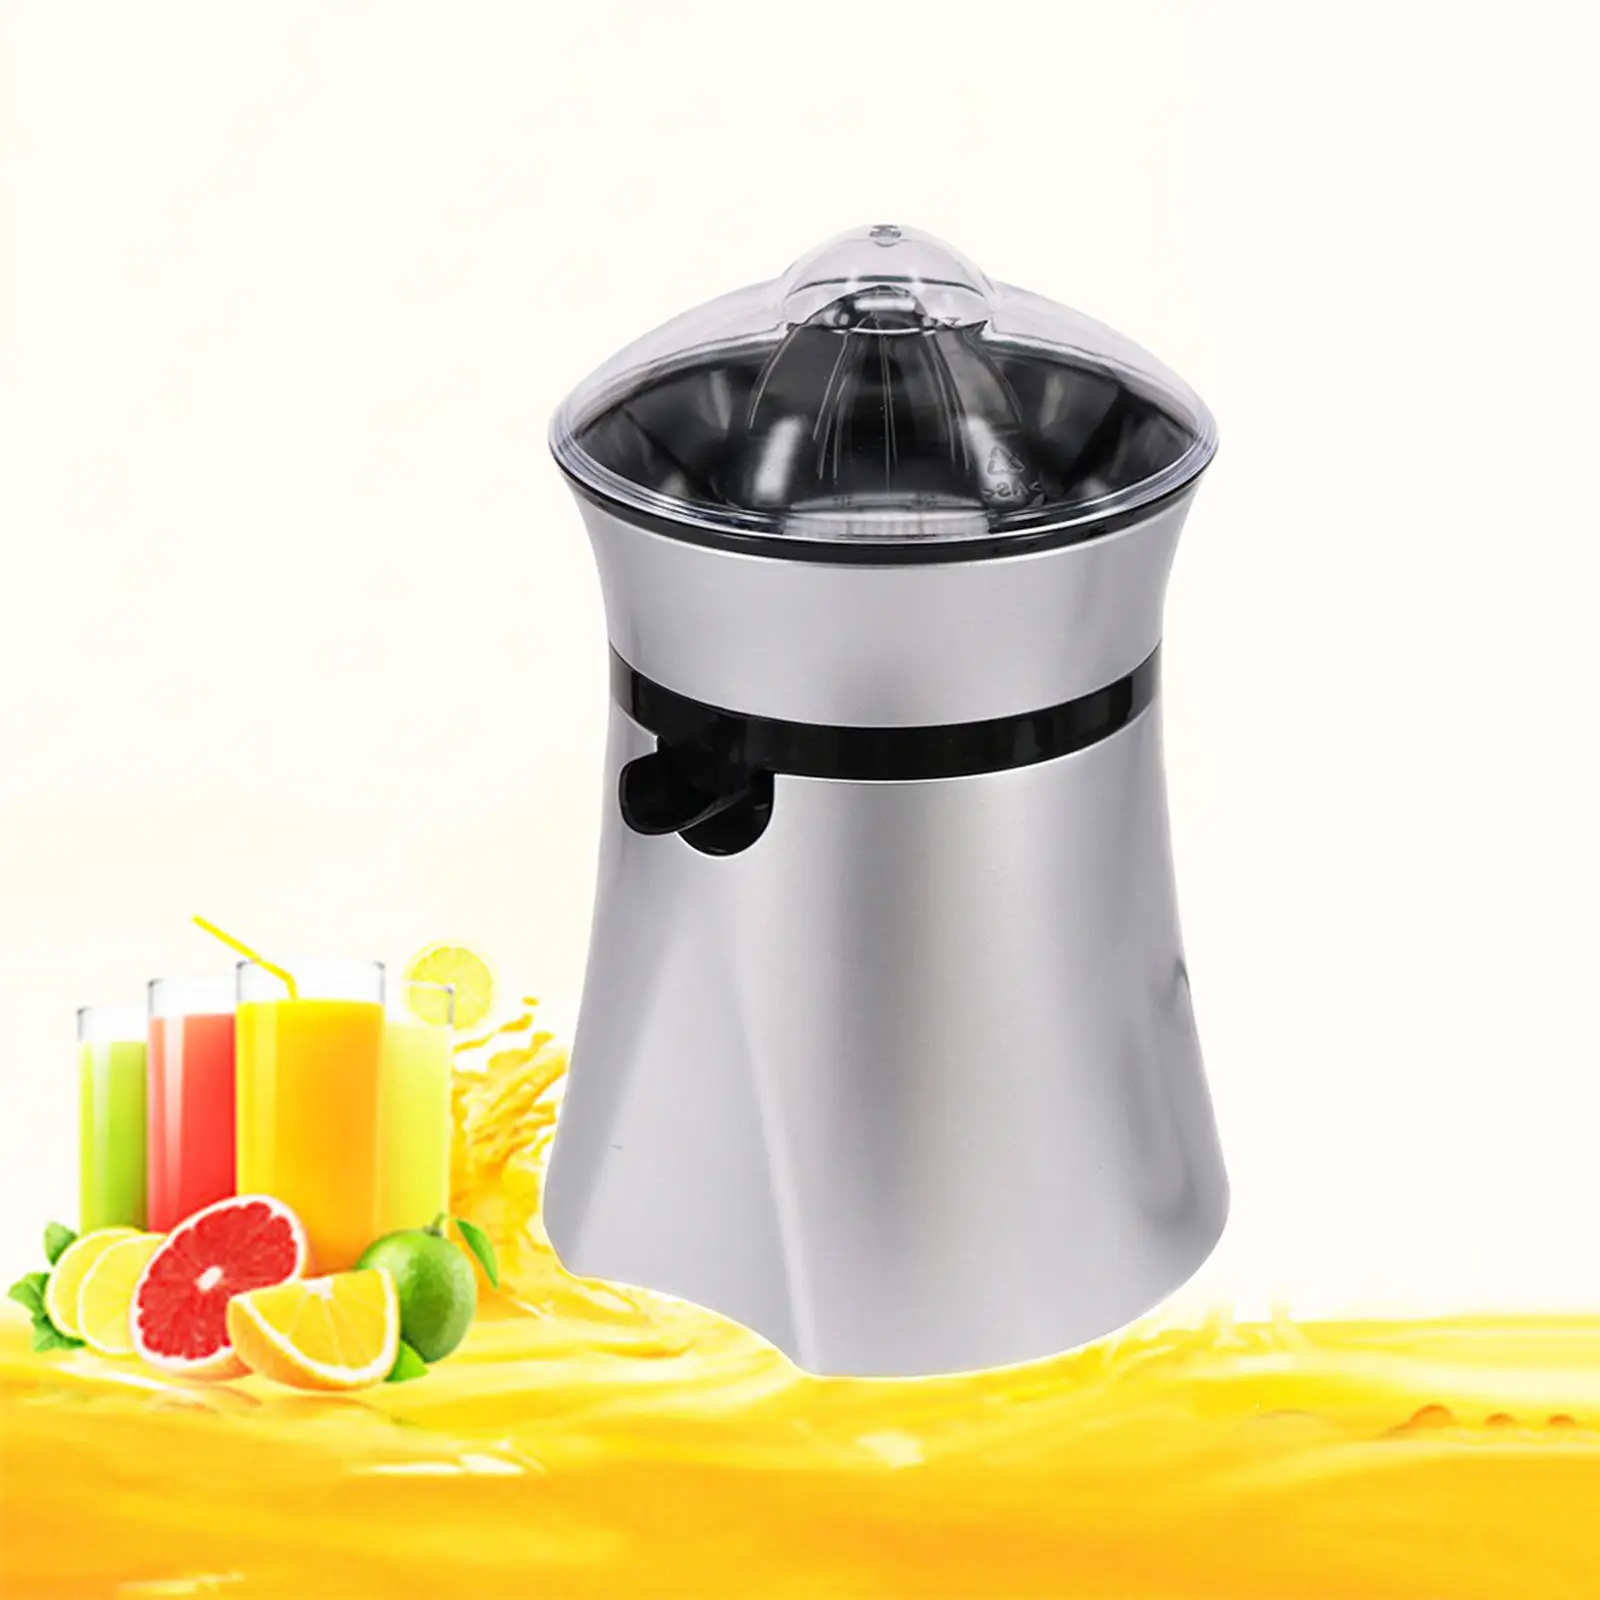 Household Electric Juicer Anti-Drip Spout 400ml Fruit Squeezer Fruit Juicer Orange Juicer Machine for Home Kitchen Appliances